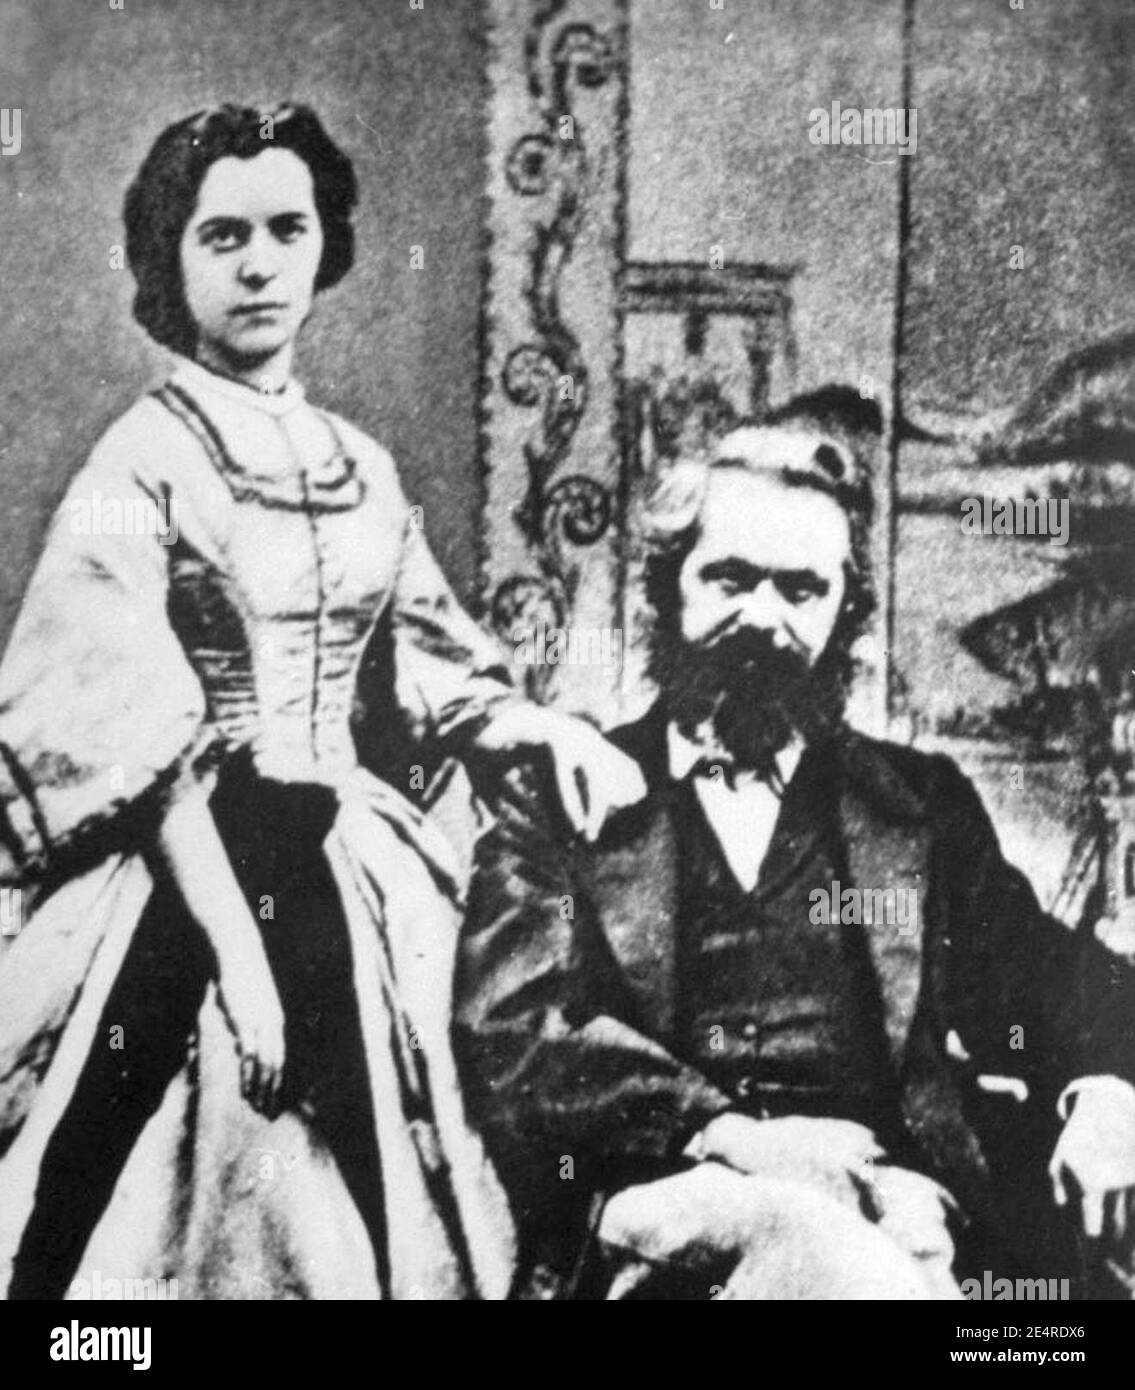 Marx Tochter Jenny Longuet stehend und Karl Marx sitzend - Foto. Stockfoto